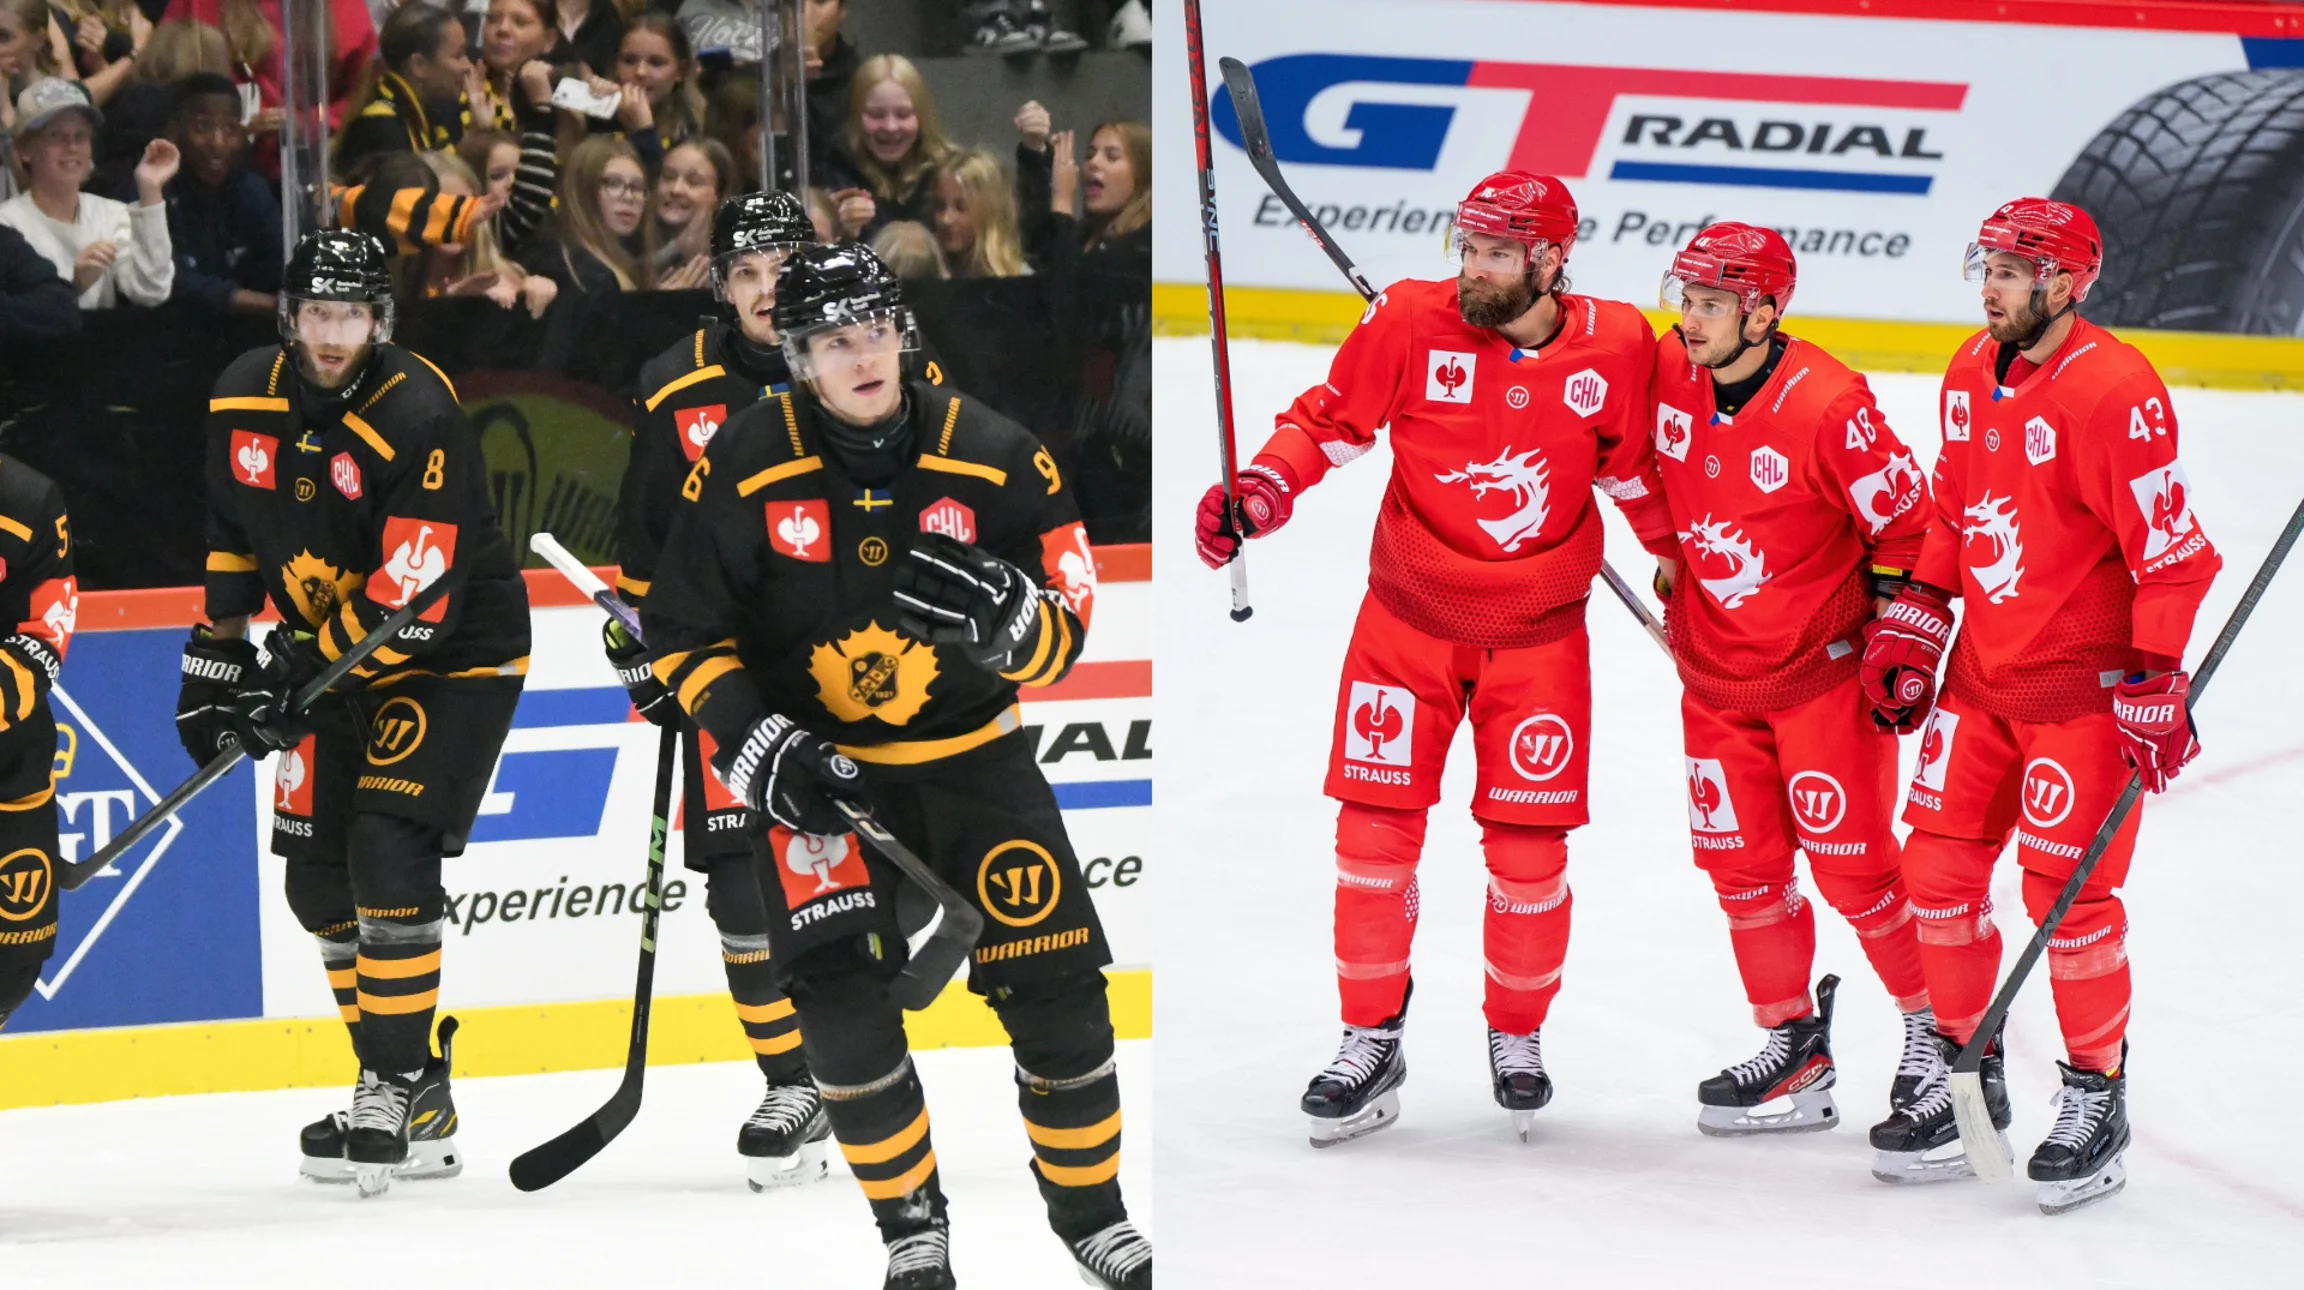 Match-up Preview Little to choose between Skellefteå and Třinec